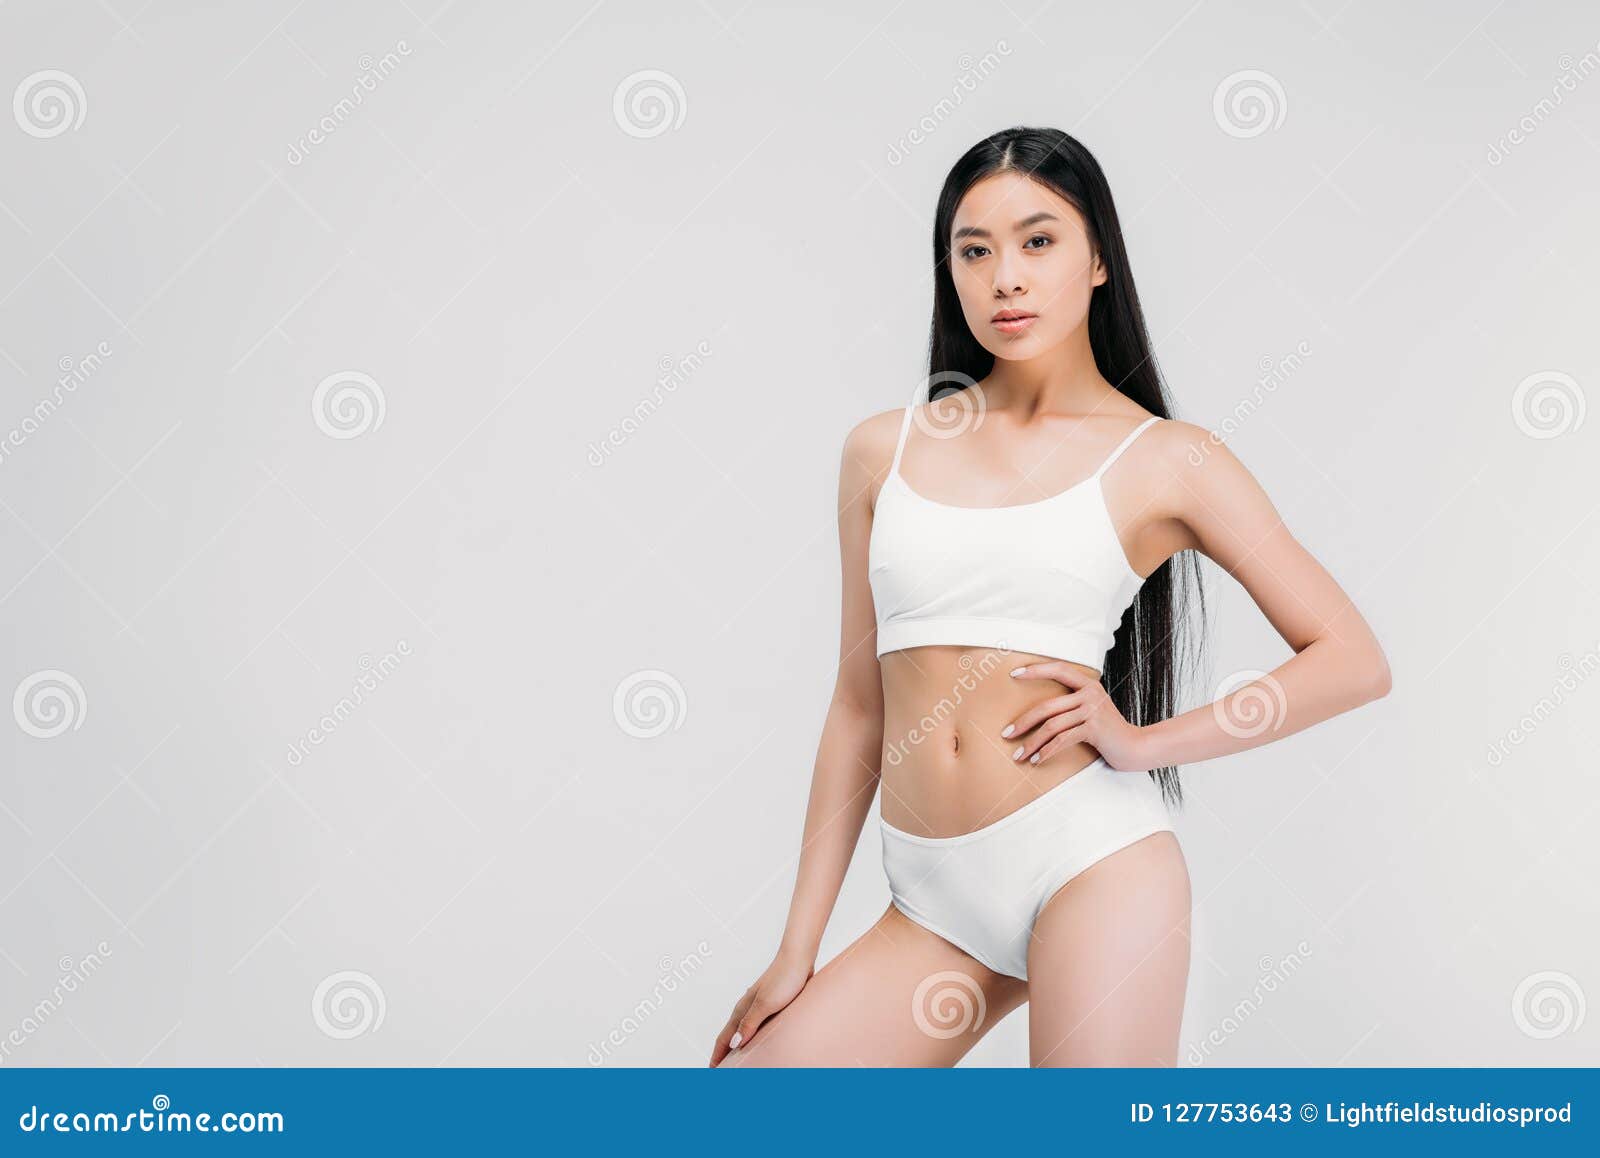 Best of Asian girls showing their panties